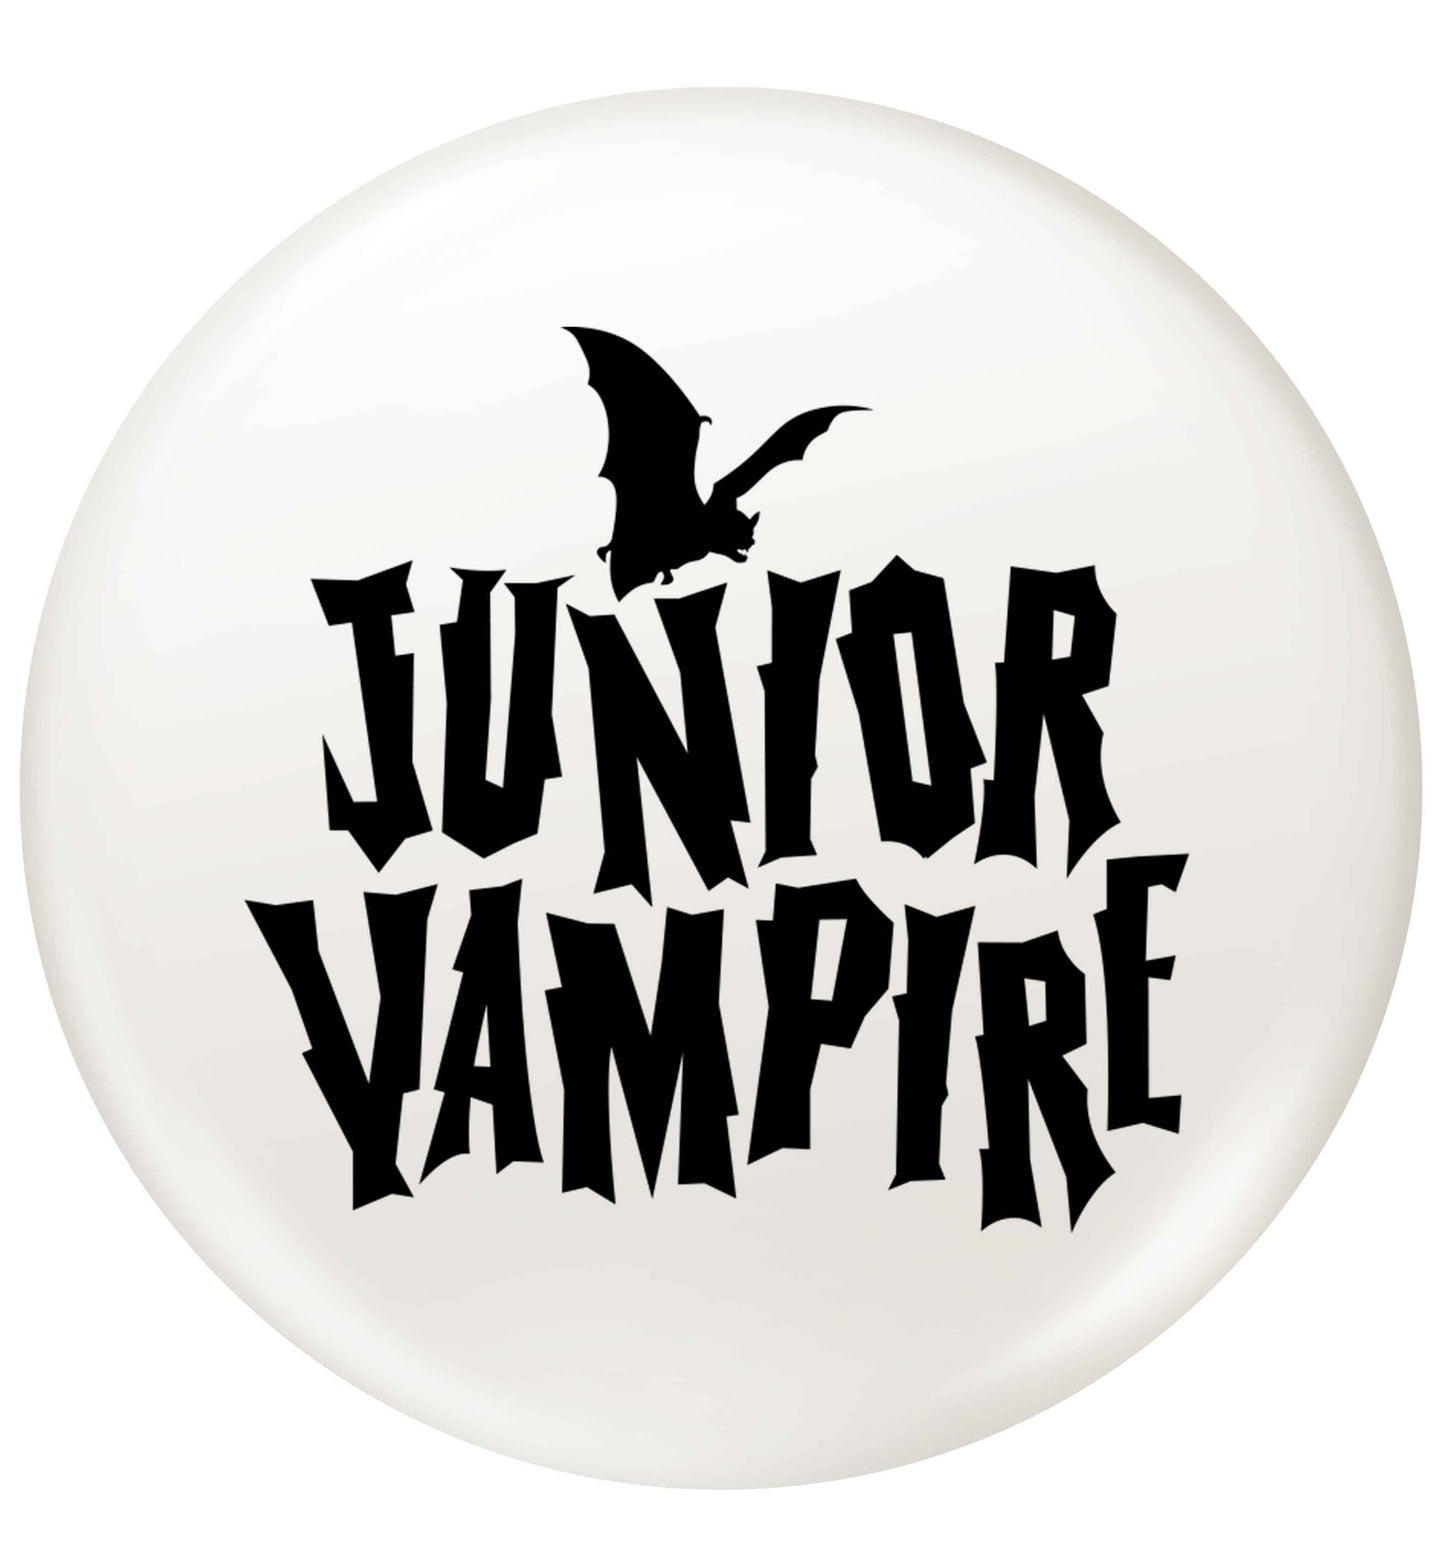 Junior vampire small 25mm Pin badge